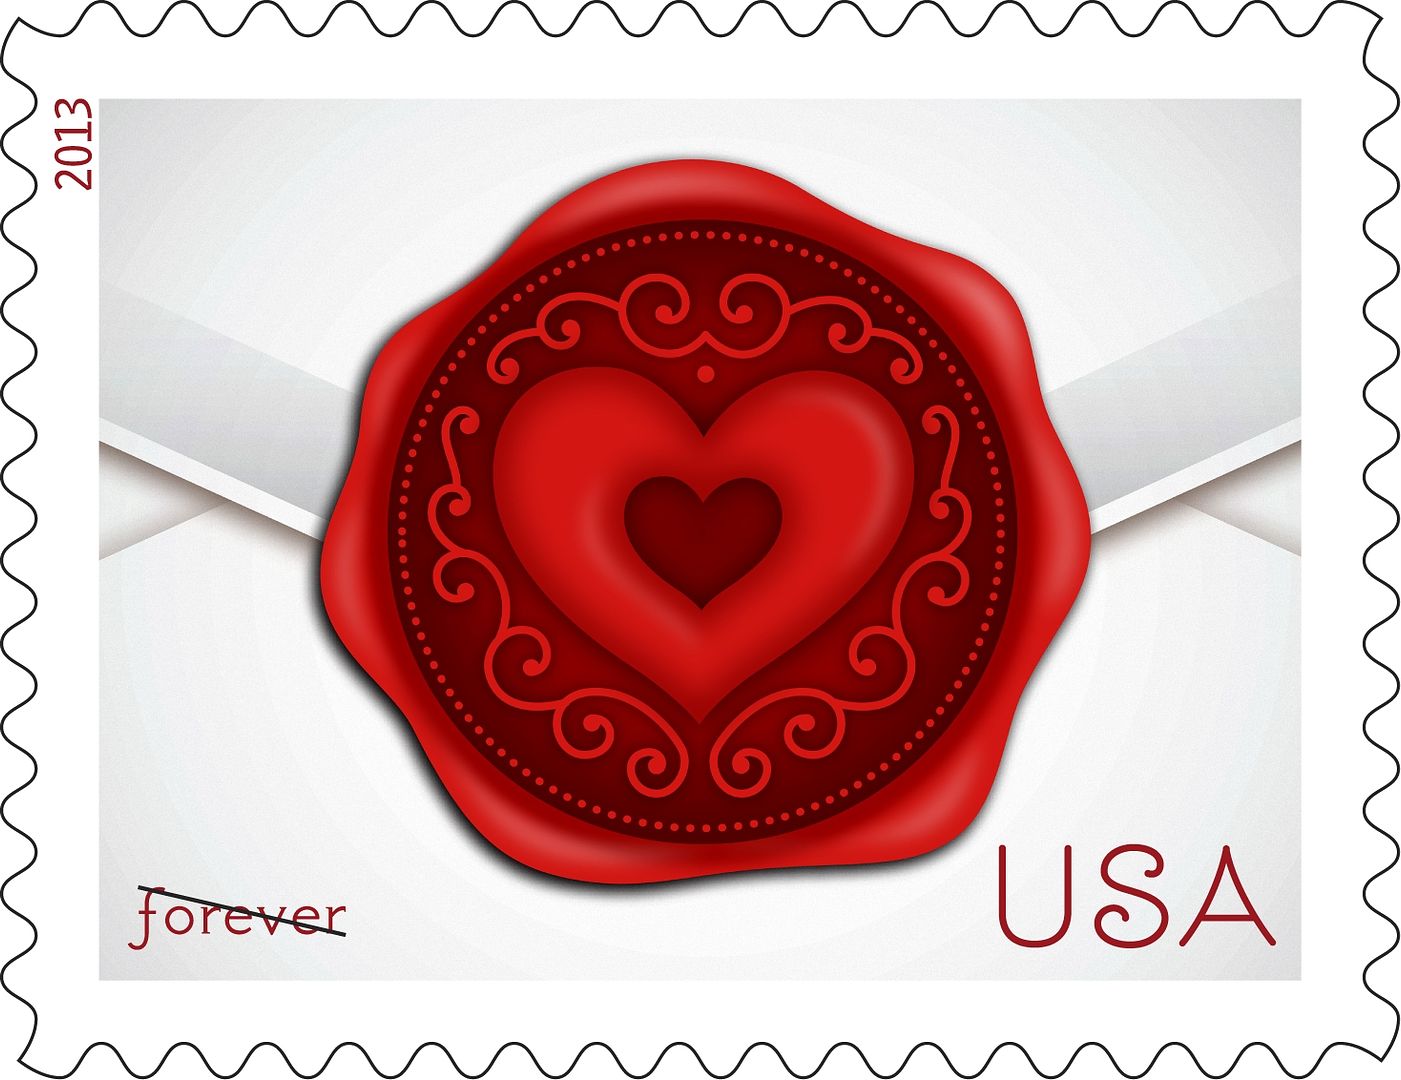 U.S. Postal Service Sealed With Love Stamp